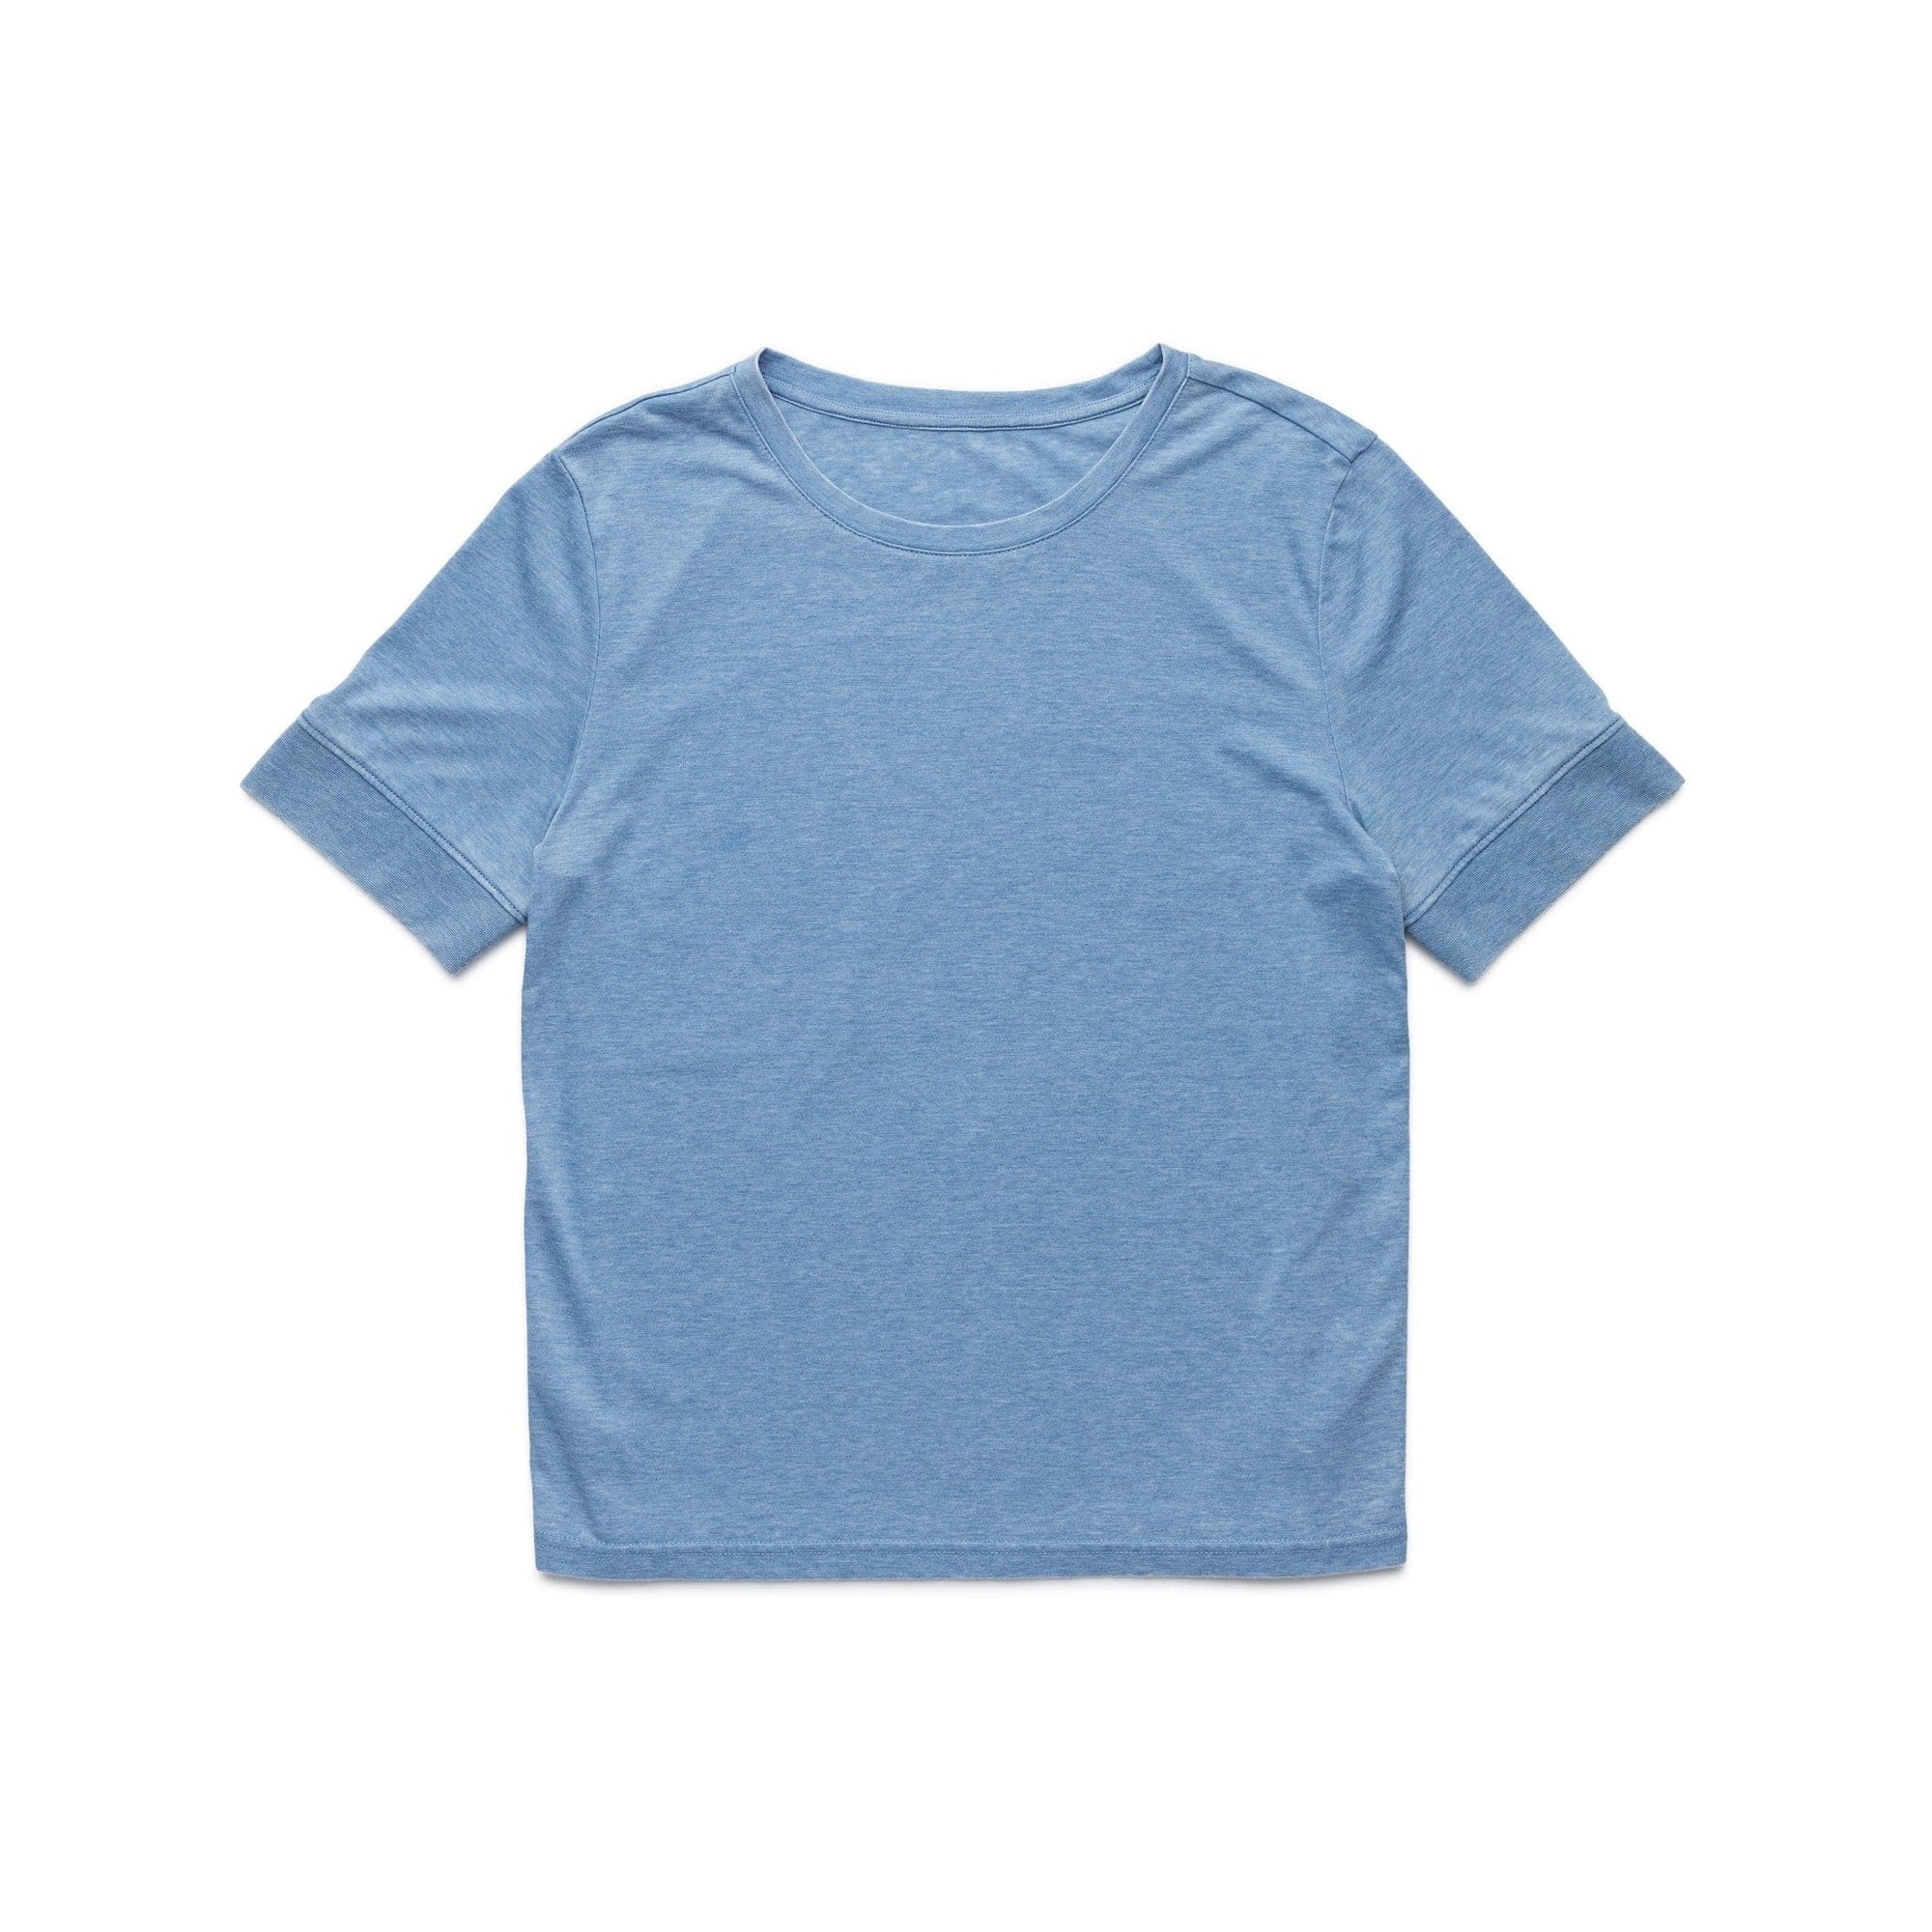 Surfside Supply Co. Shirts Bell Burnout Tee - Stellar Blue